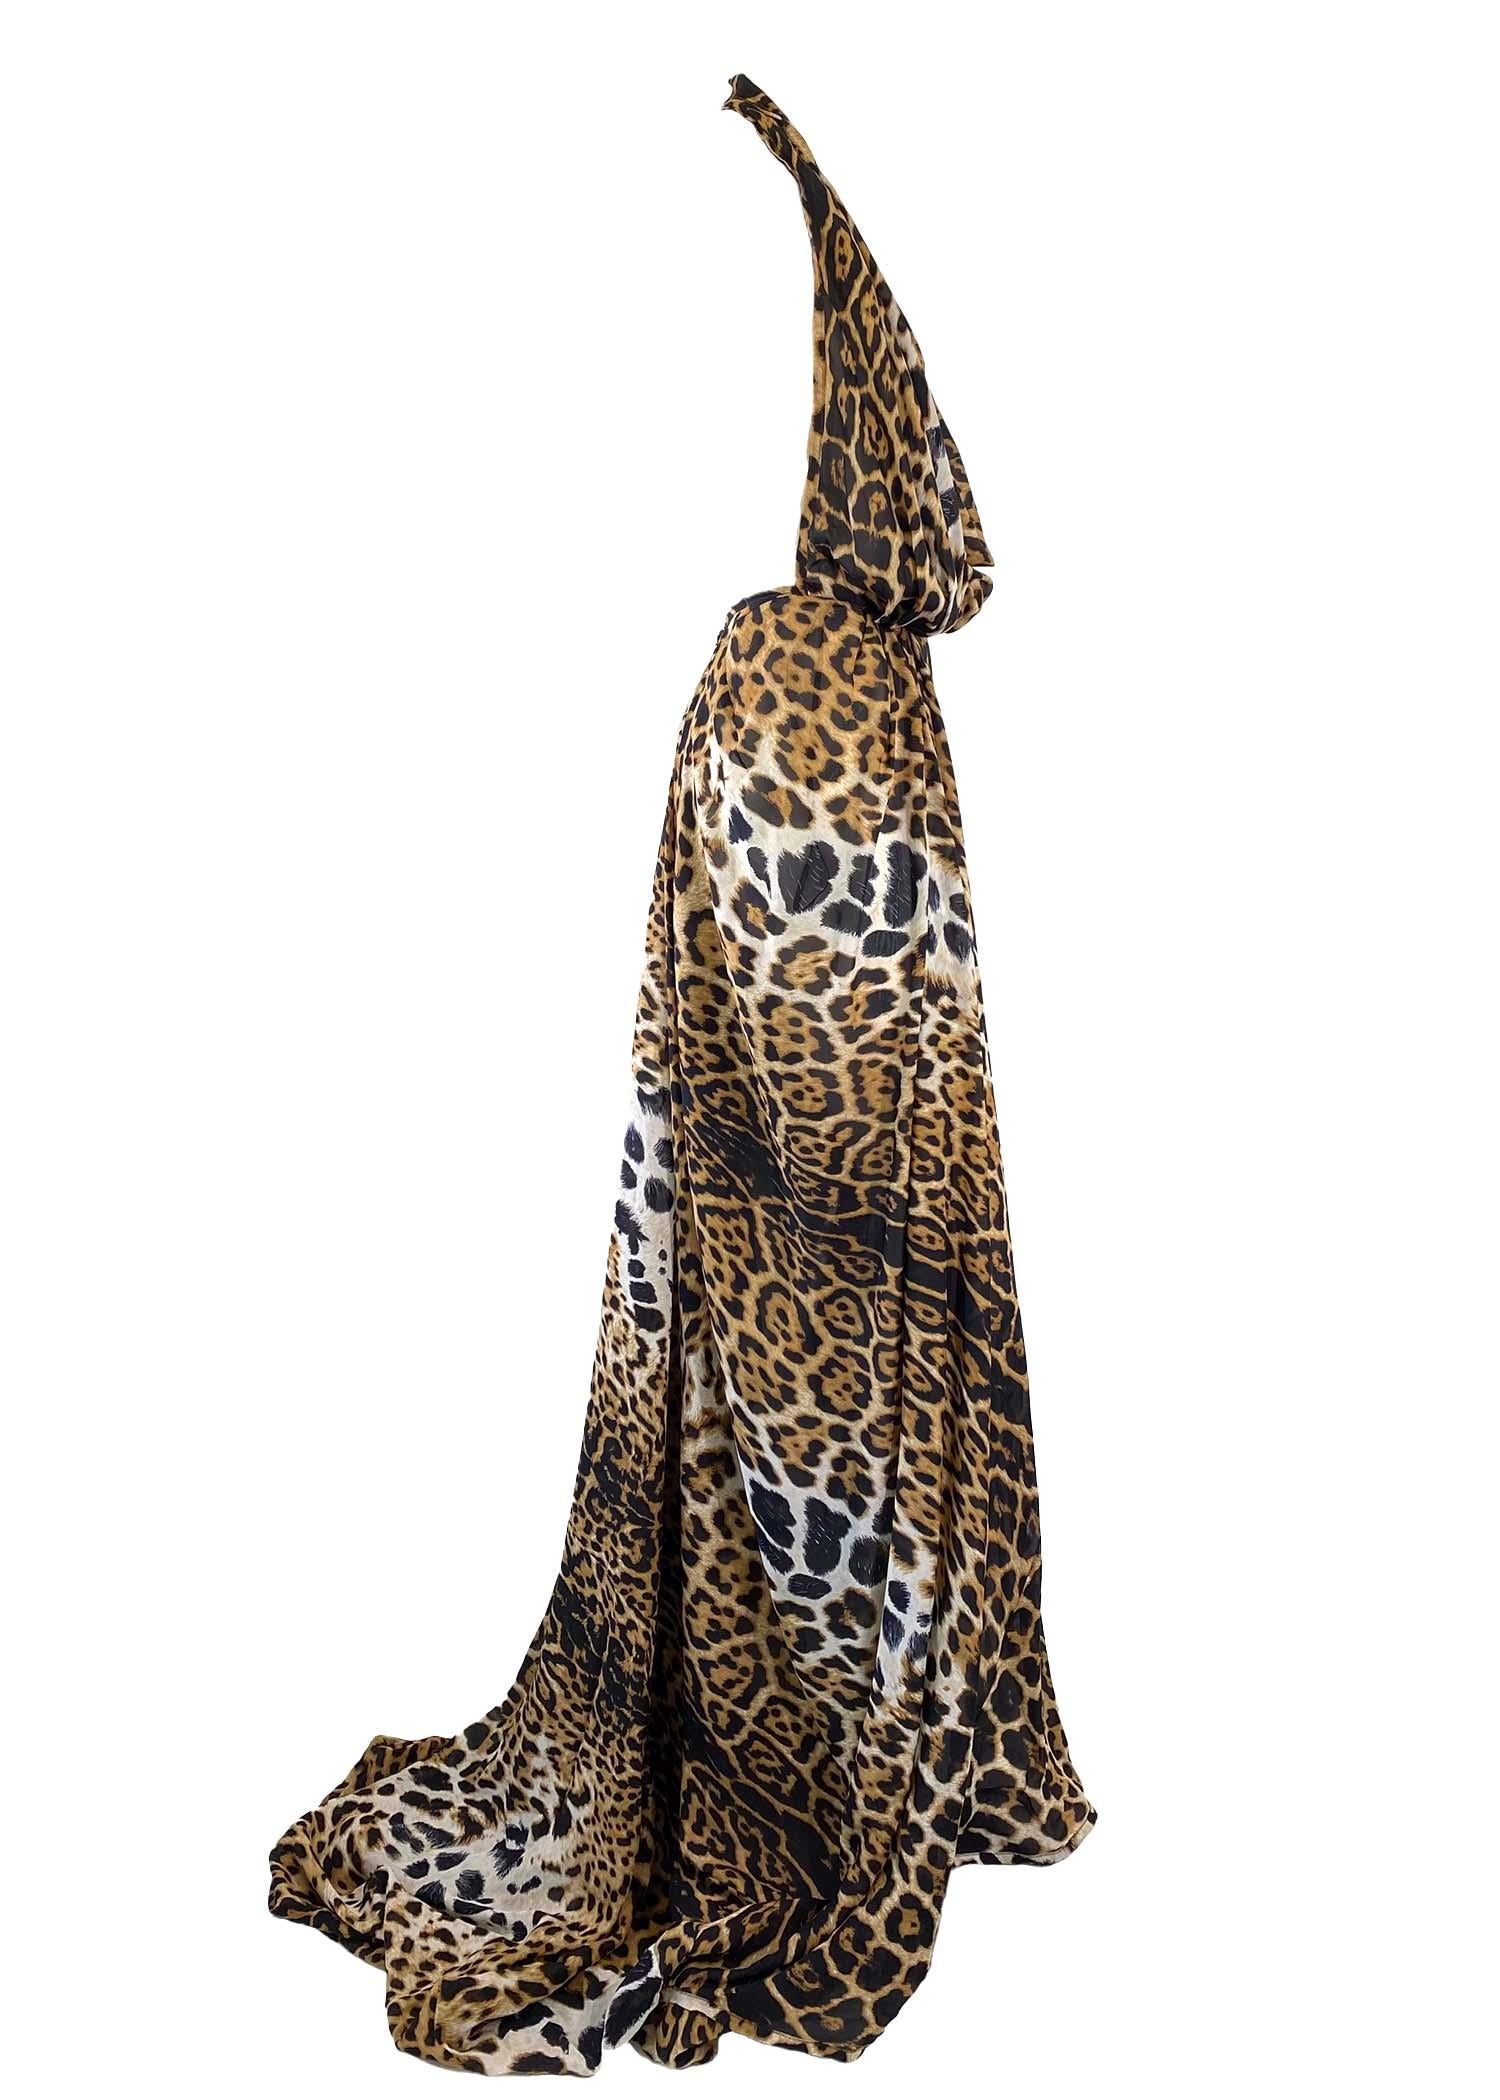 Women's S/S 2002 Yves Saint Laurent by Tom Ford Silk Cheetah Print Gown Safari  For Sale